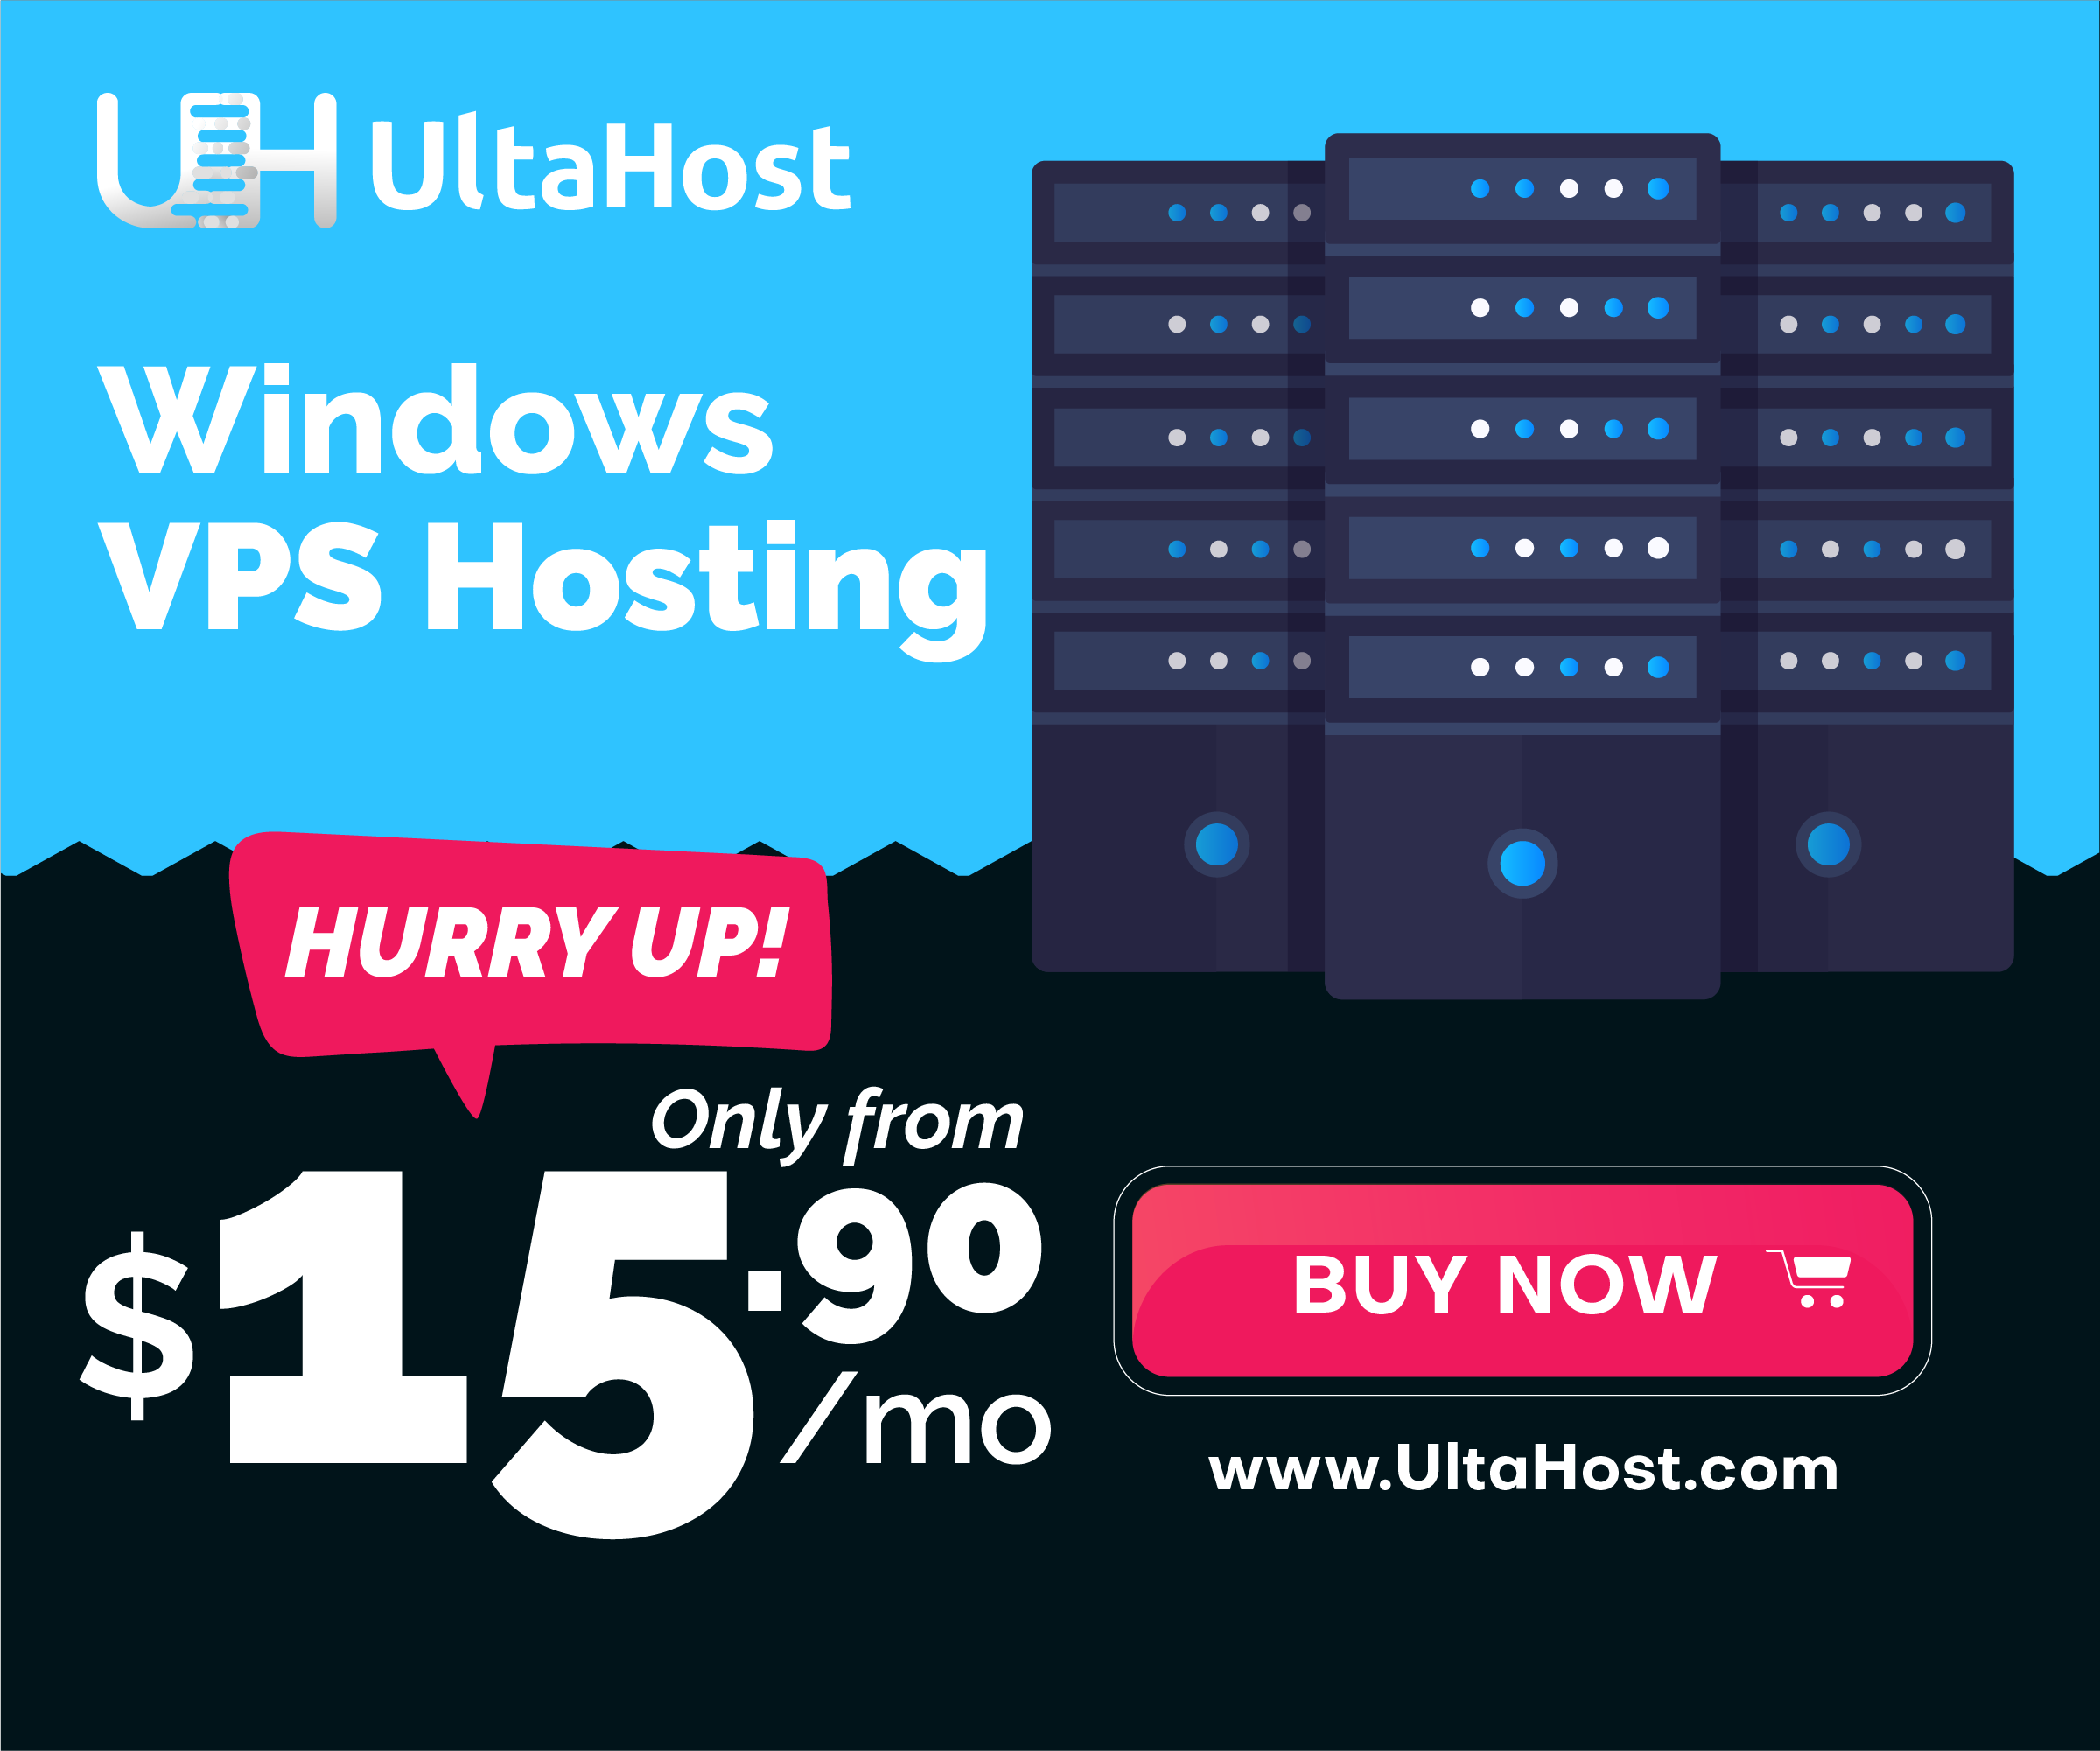 ultahost_cheap_windows_hosting_336x280